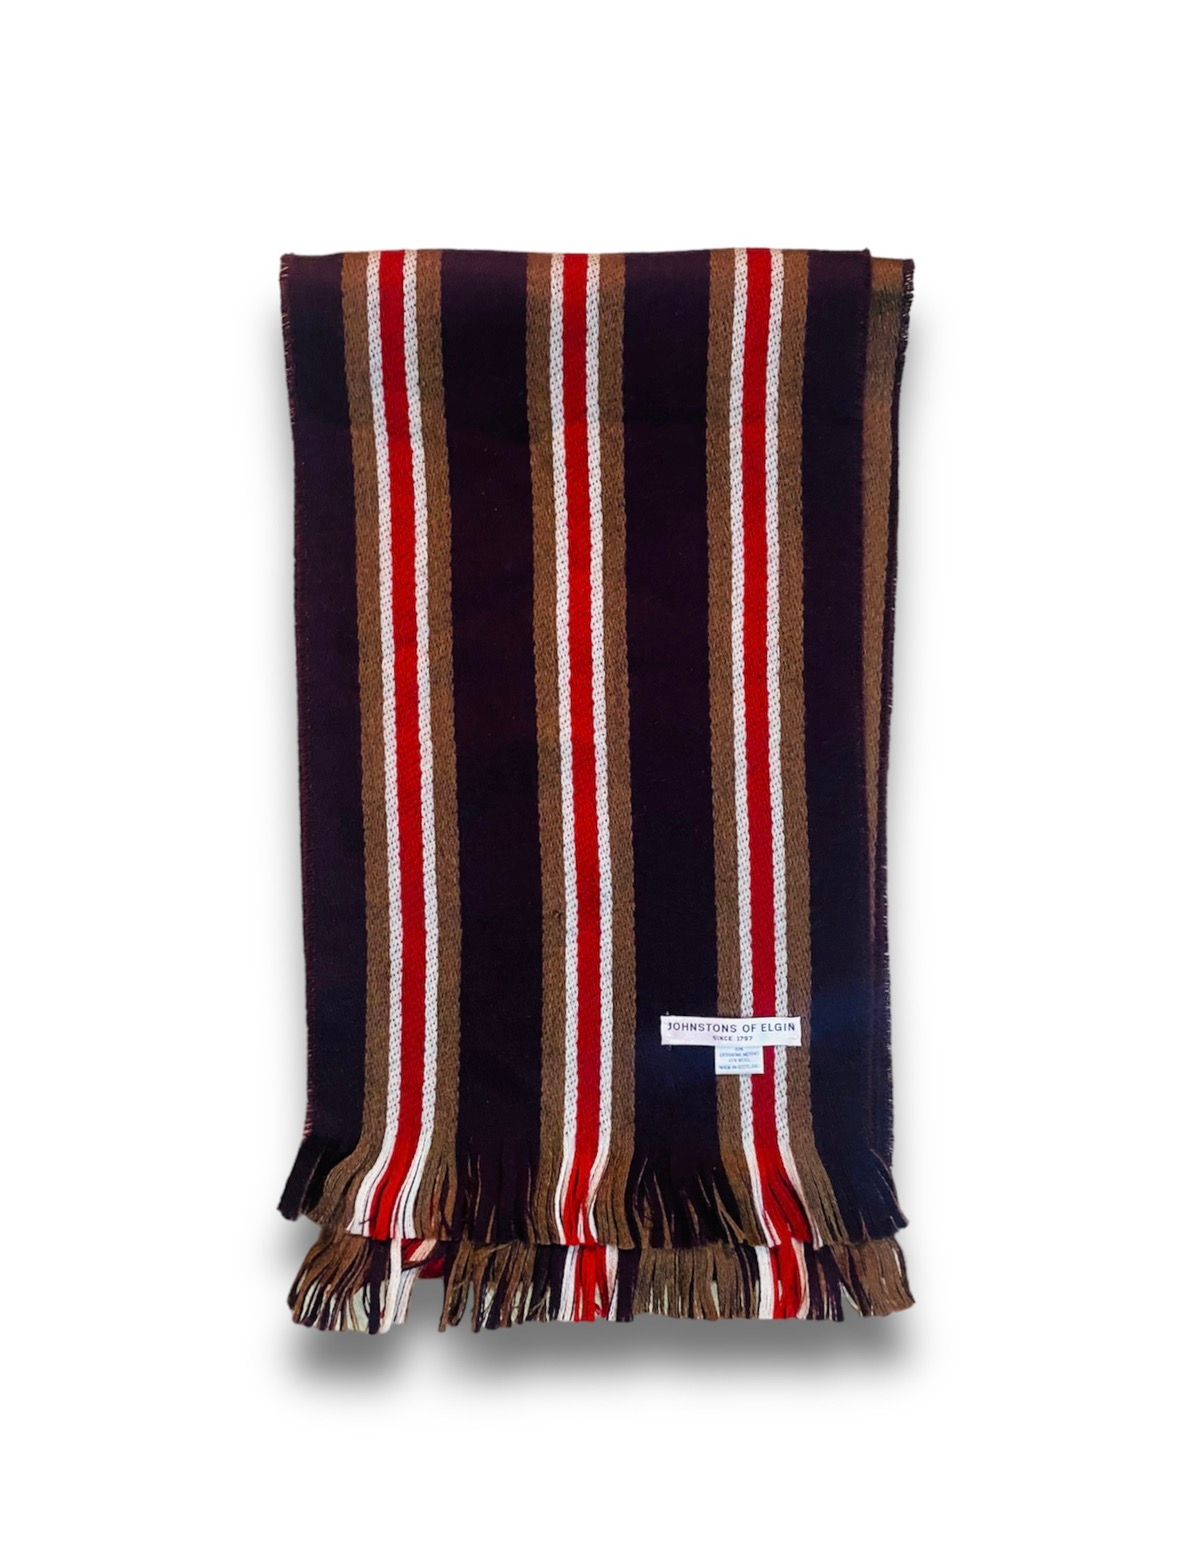 Vintage - Johnstons Of Elgin Scarf Knit Wool BrownRed Made in Scotland - 1